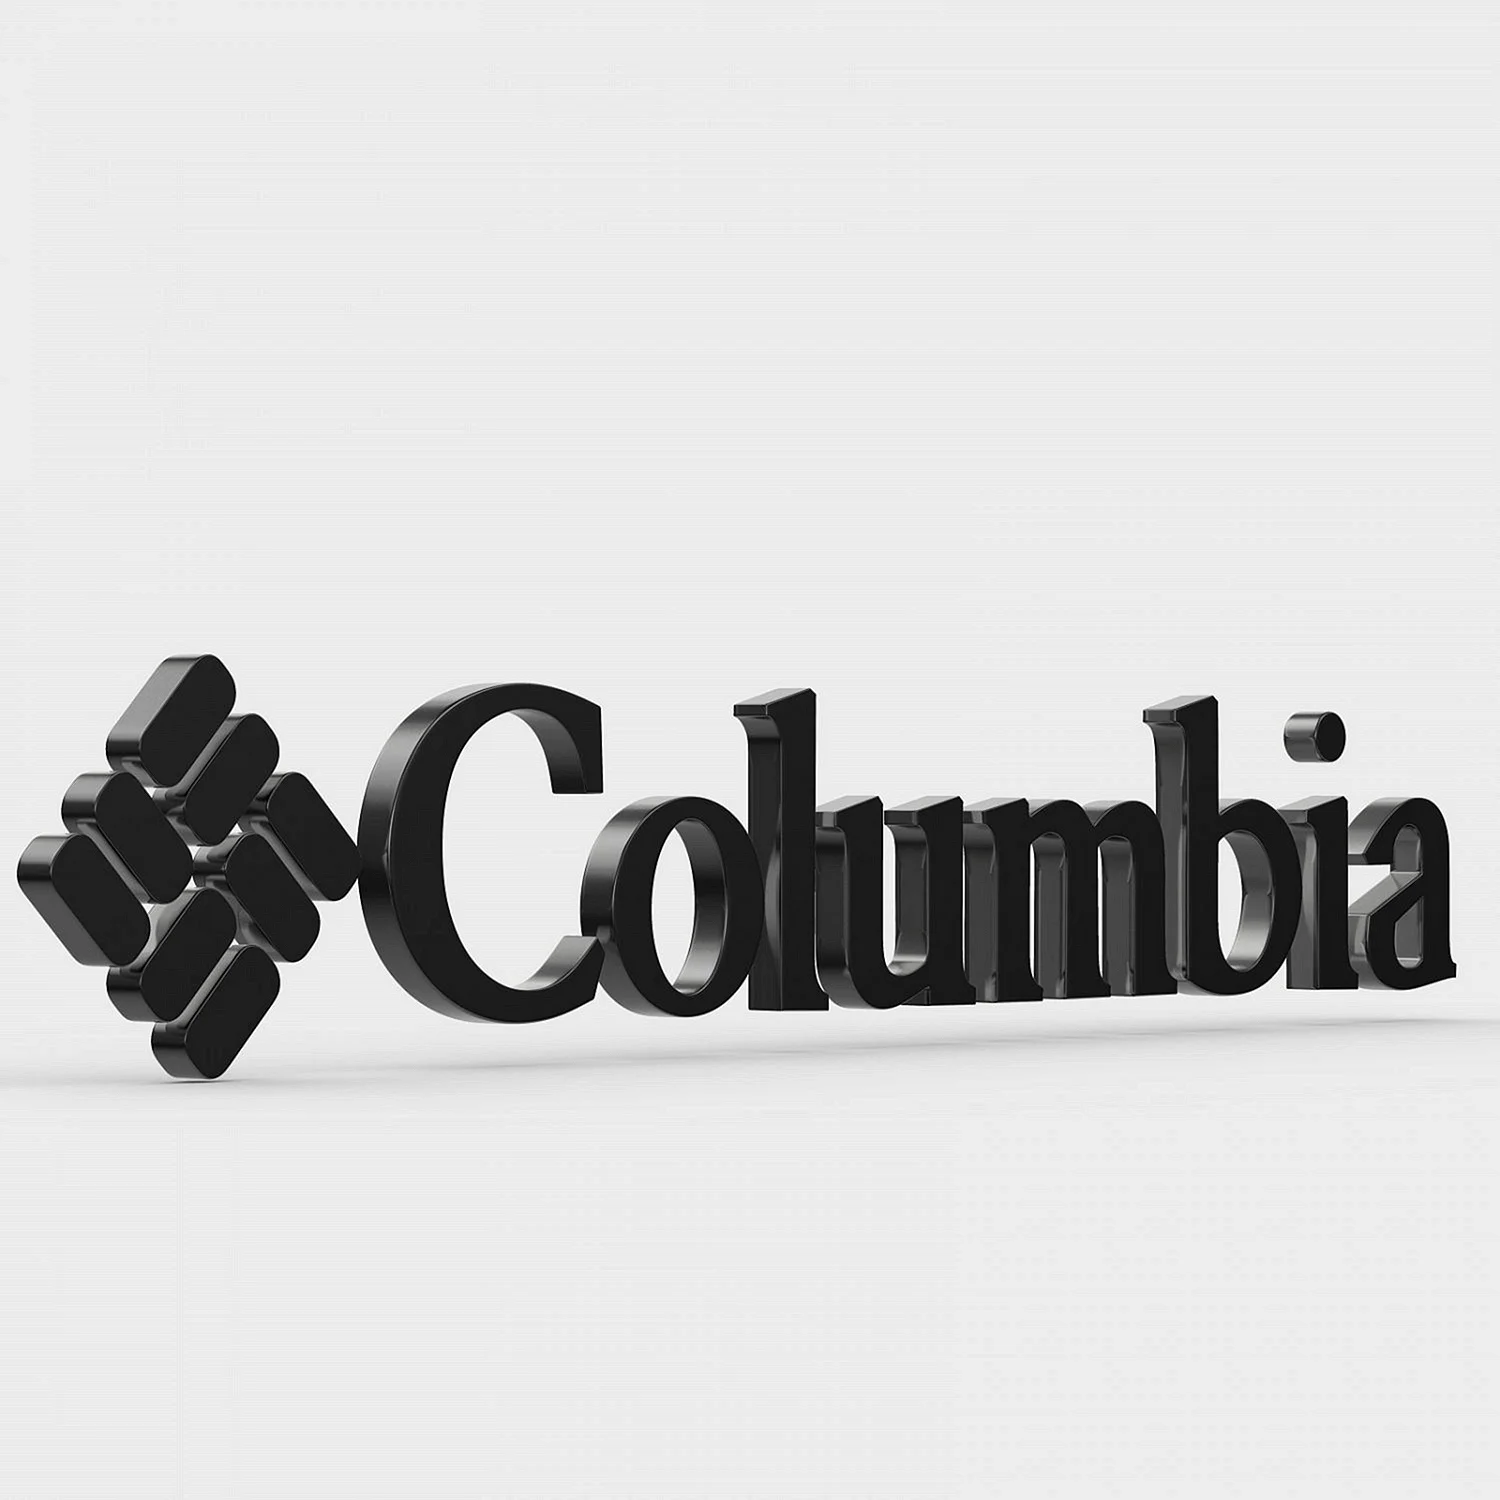 Model Columbia logo